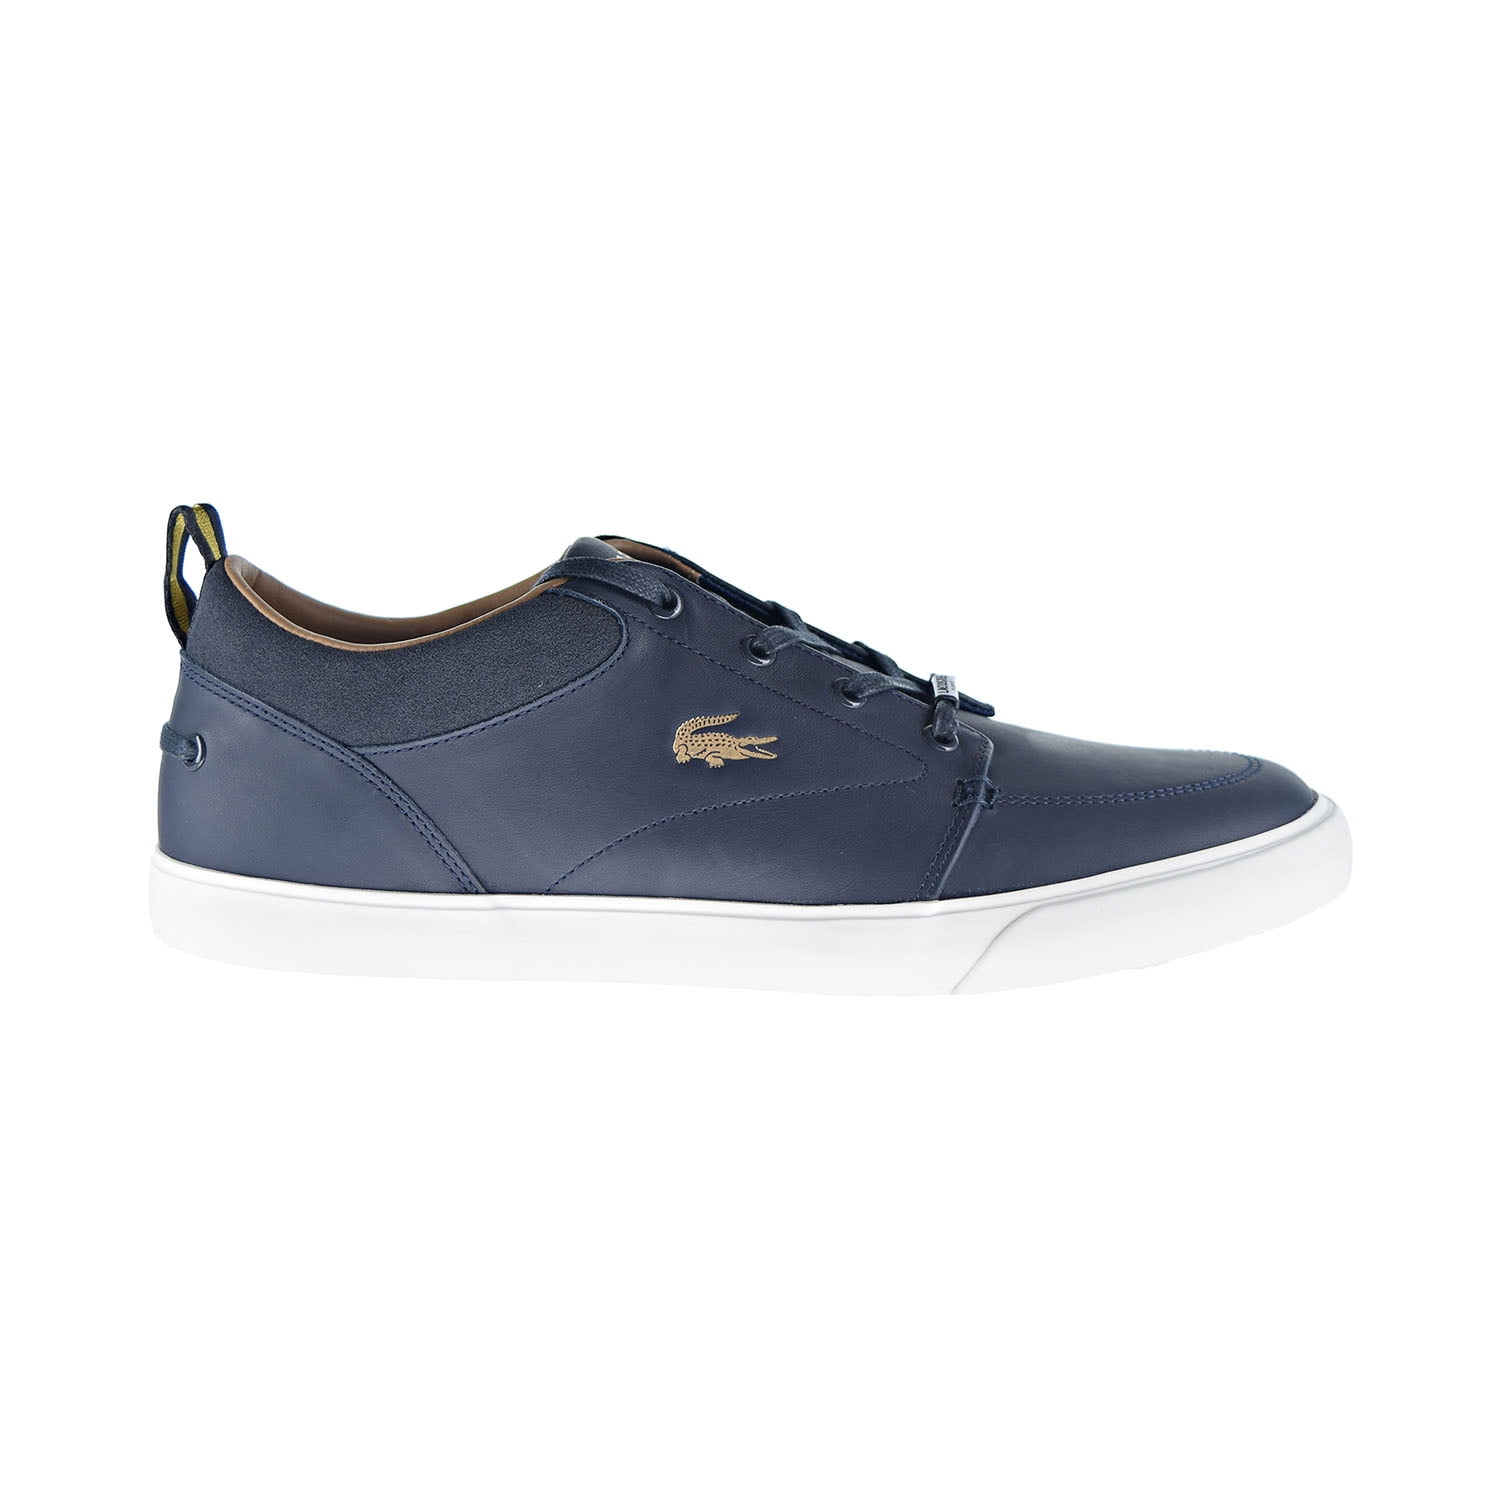 Lacoste Bayliss Premium 419 1 U CMA Men's Shoes Navy/Off White 7 ...